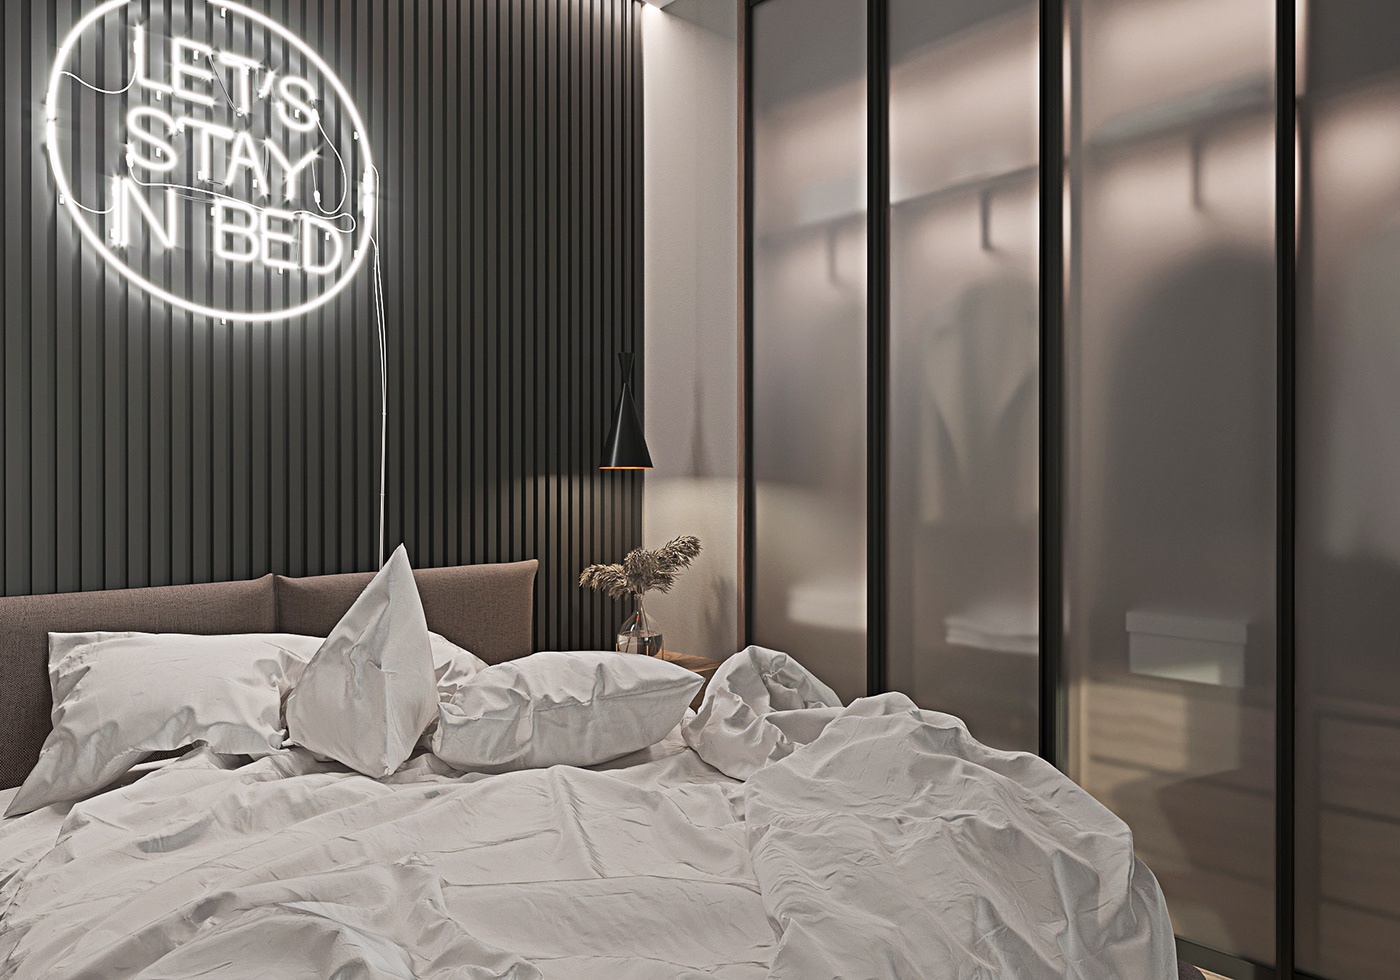 3ds max 3д corona renderer design Interior визуализация дизайн интерьера Интерьер спальни Квартира-студия спальня